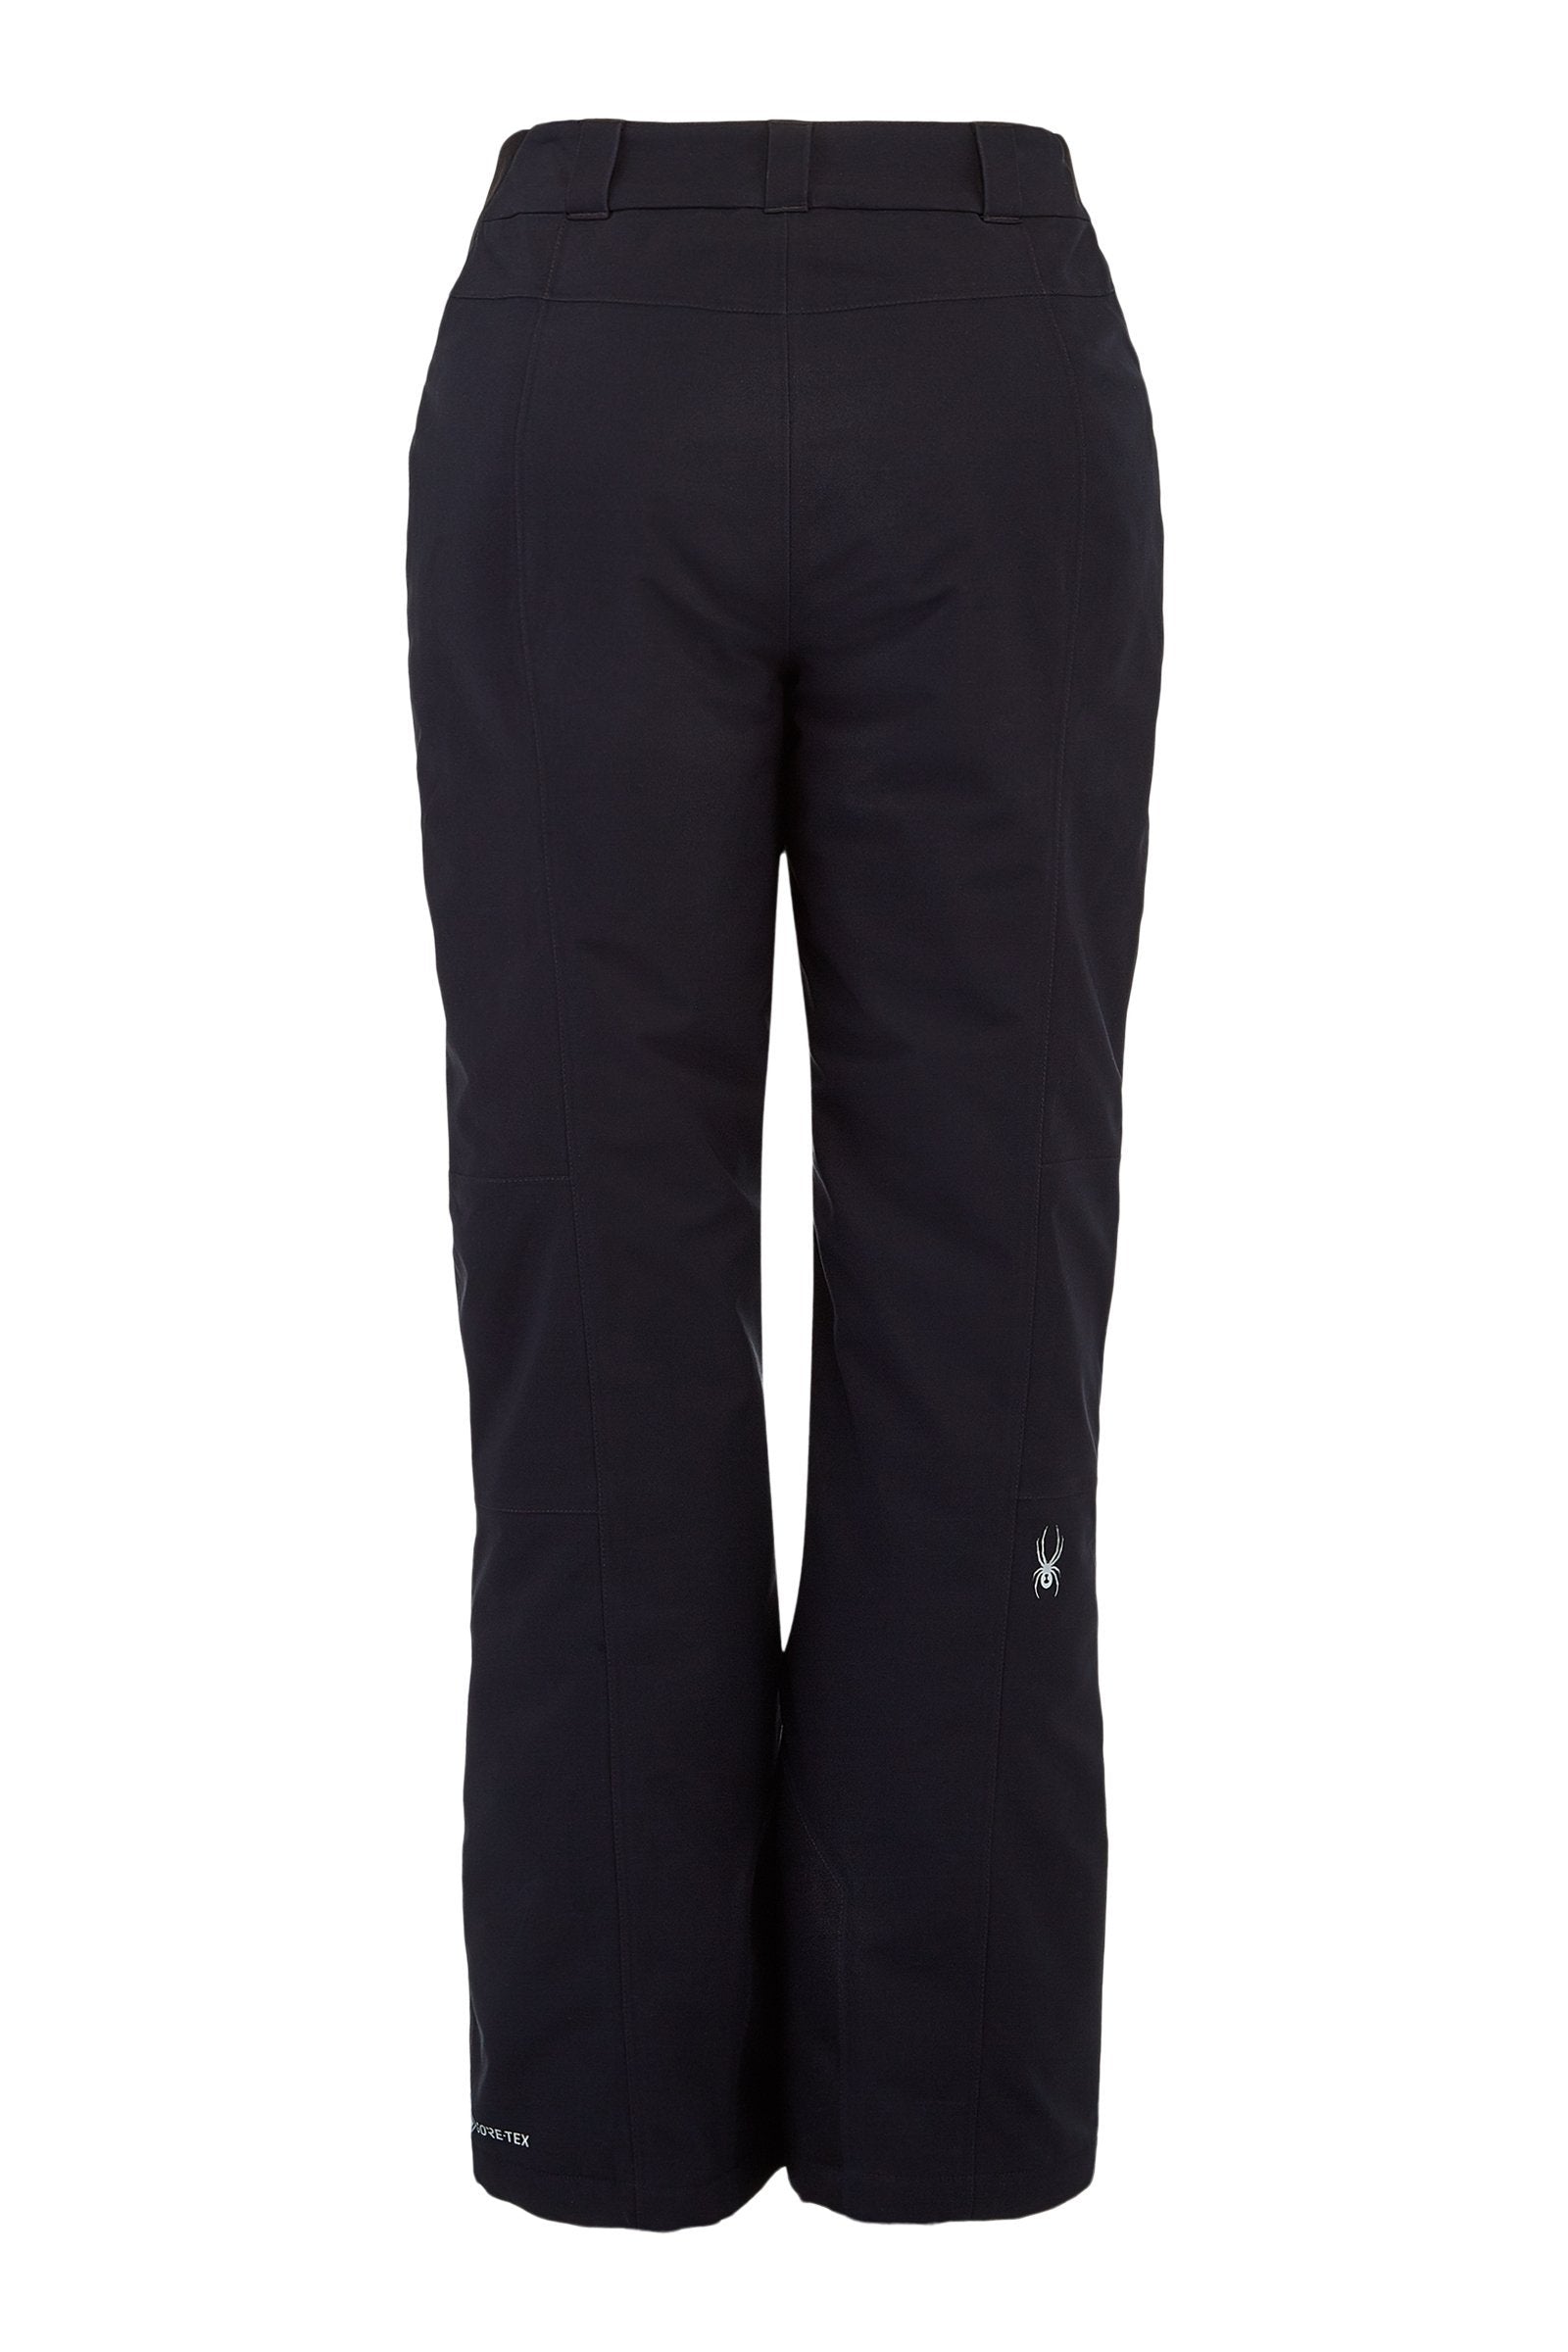 Spyder Women's Winner Gore-tex Ski Tailored Fit Pants, 2-Regular,  Black/Black : : Clothing, Shoes & Accessories